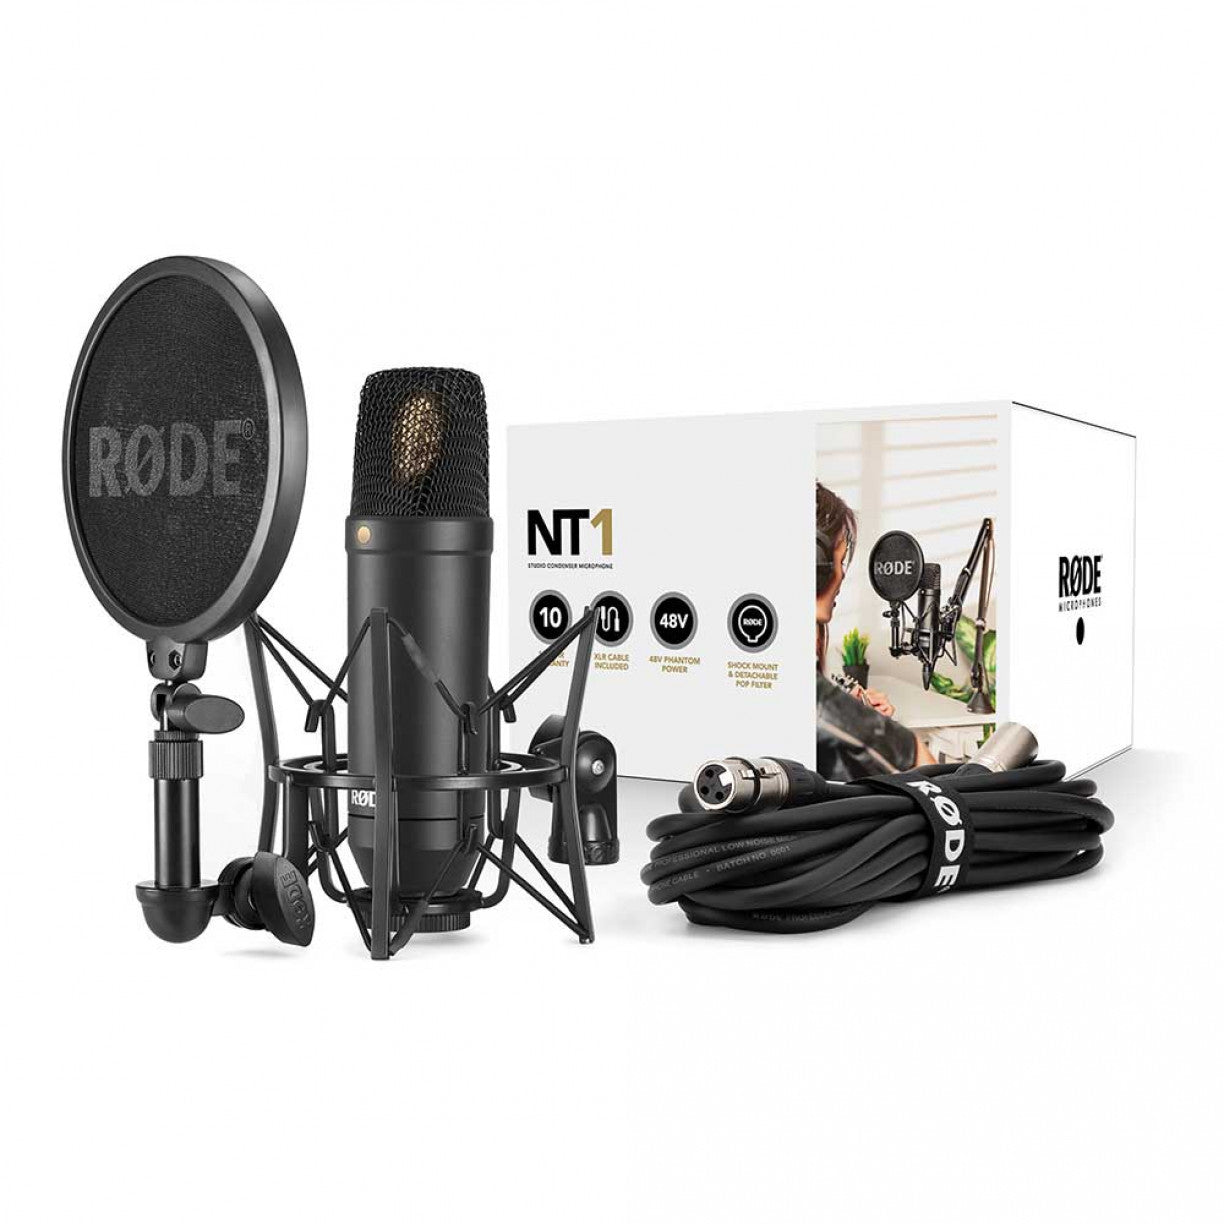 Rode NT1 Condenser Microphone w/ SMR Shock Mount